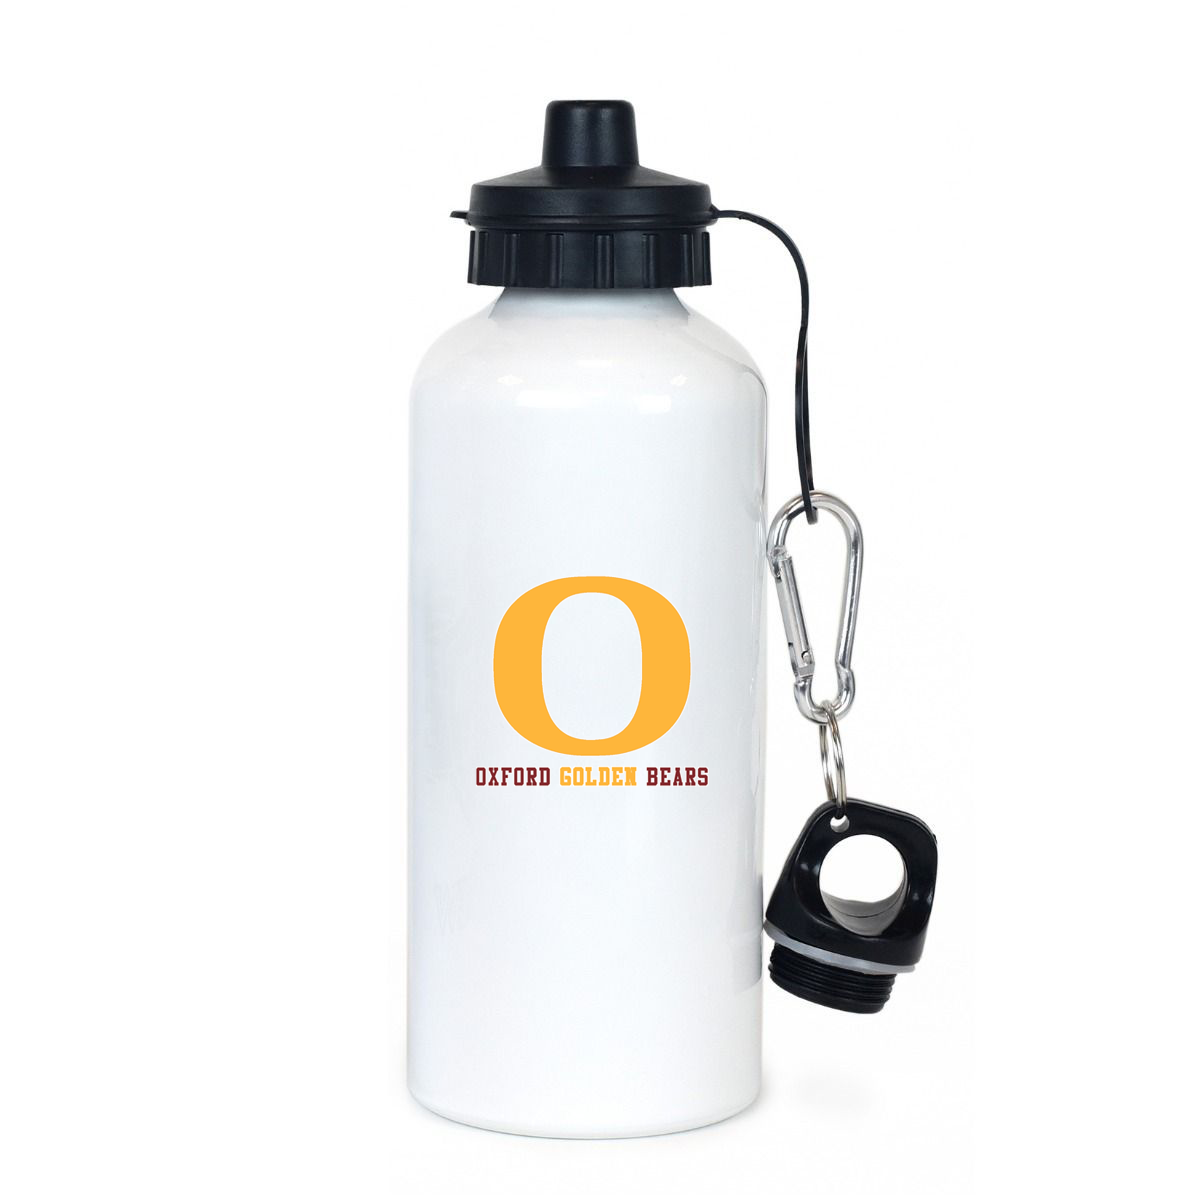 Oxford Golden Bears Team Water Bottle